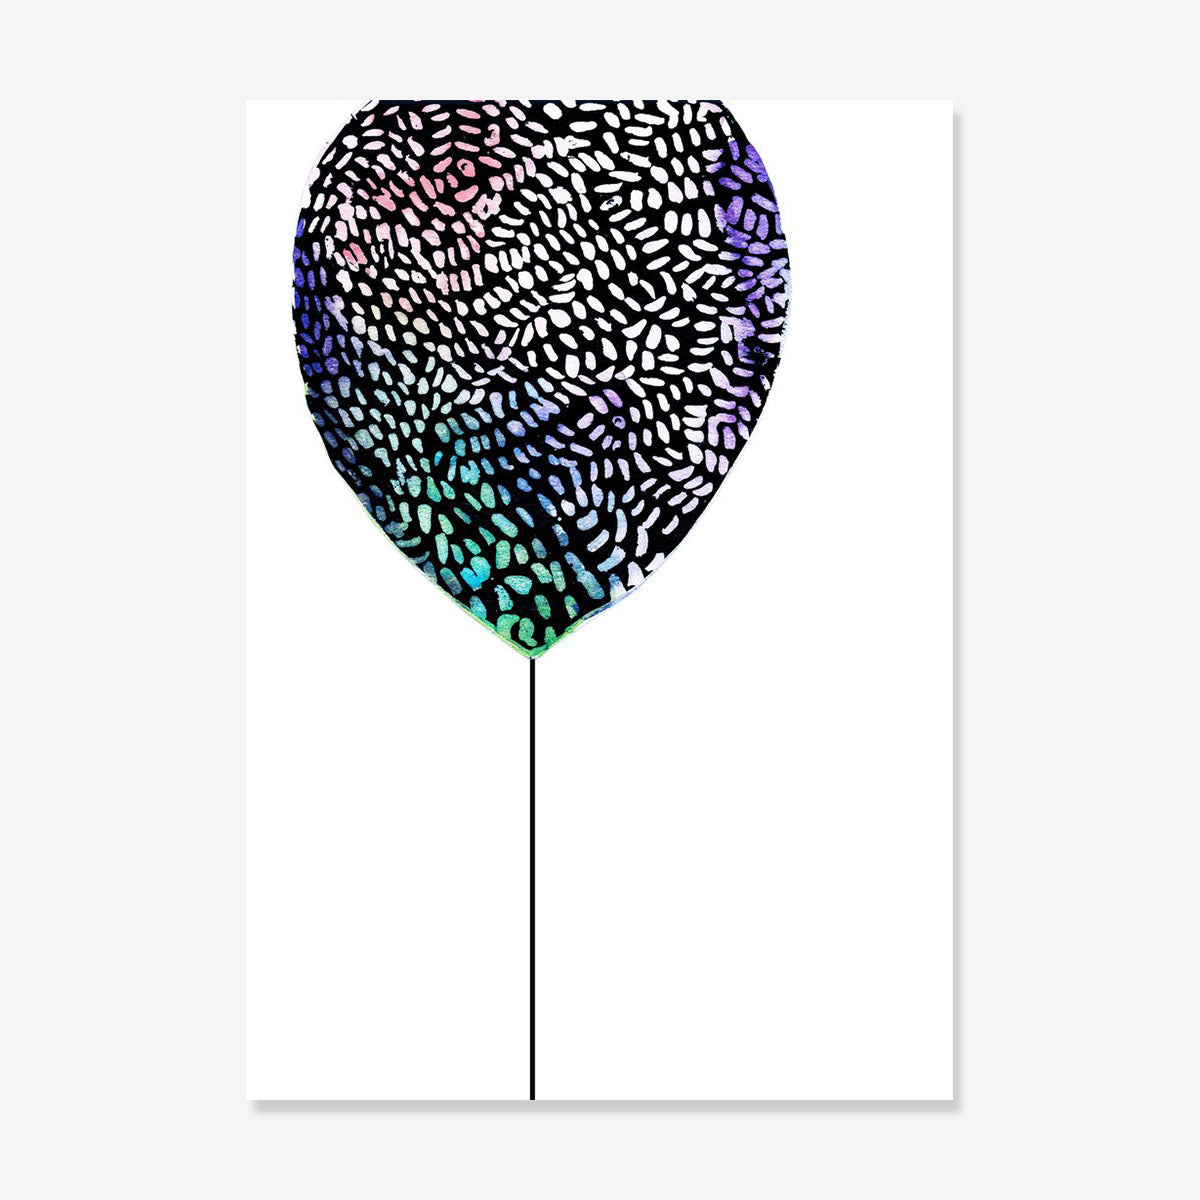 Wonder & Rah Big Balloon Poster - A3